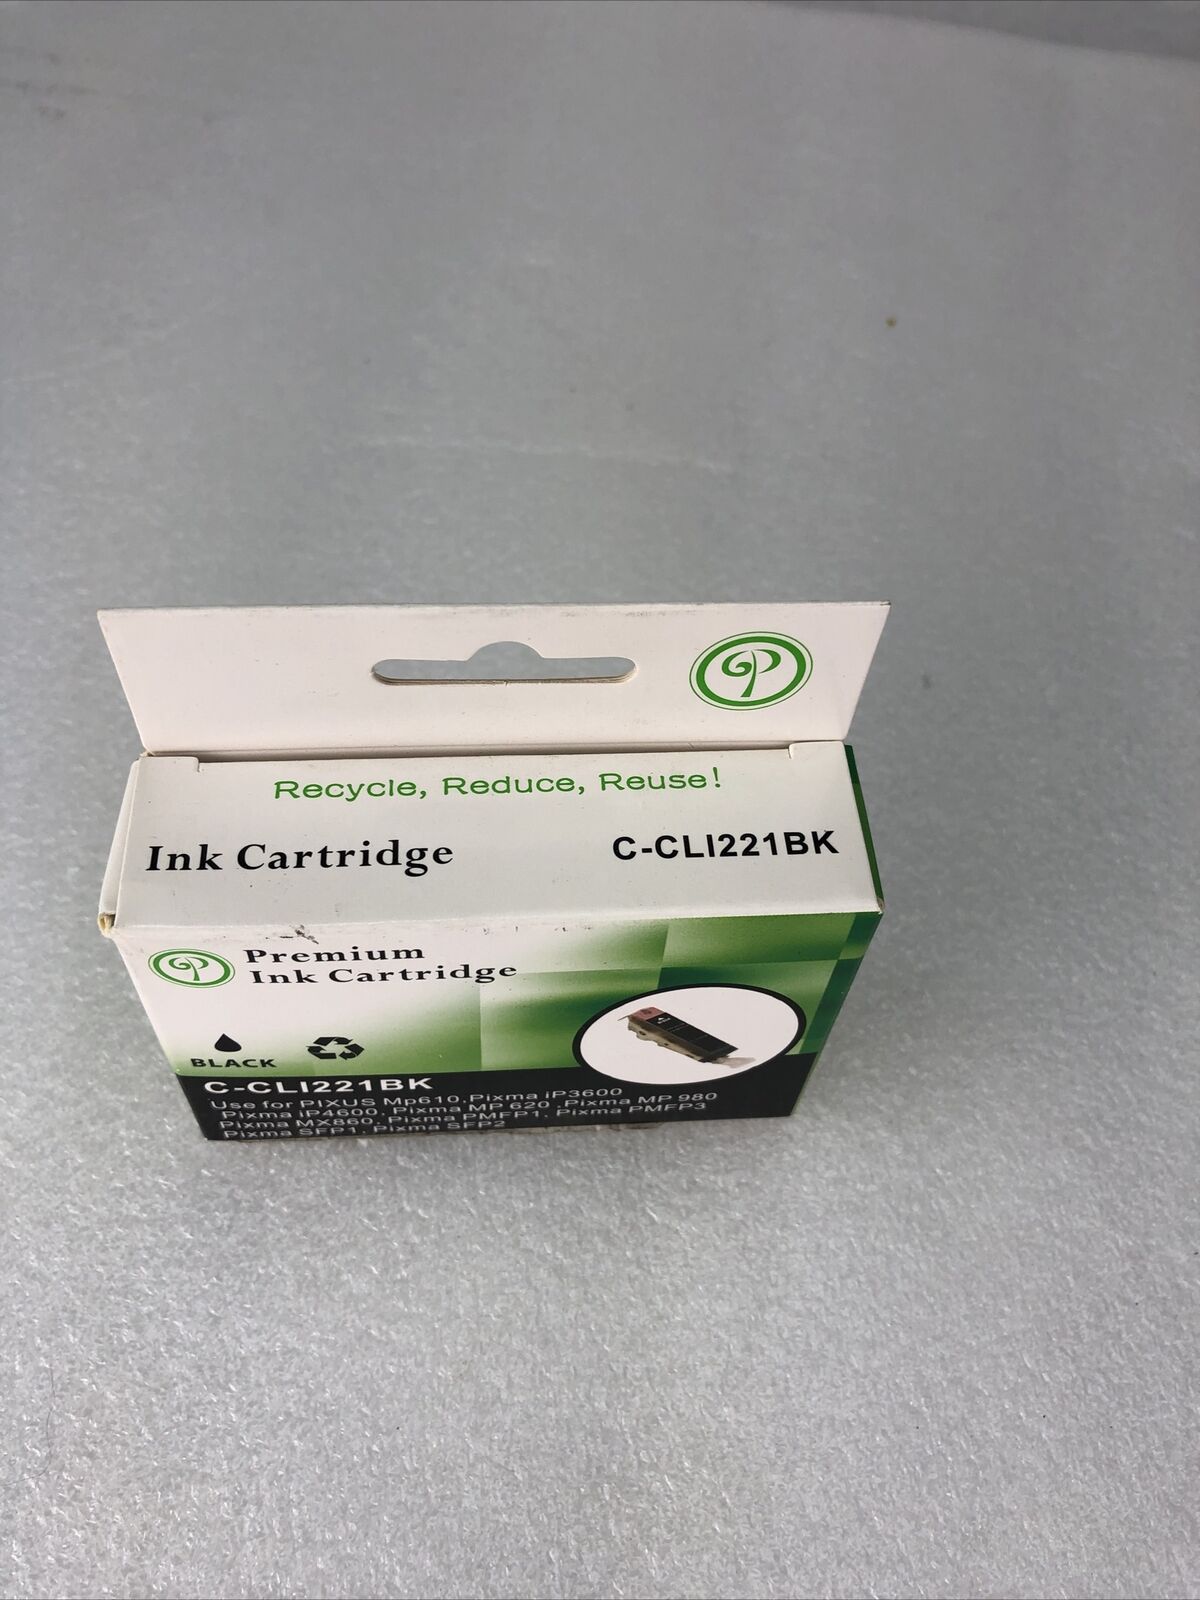 Monoprice Premium Black Ink Cartridge C-CLI221BK